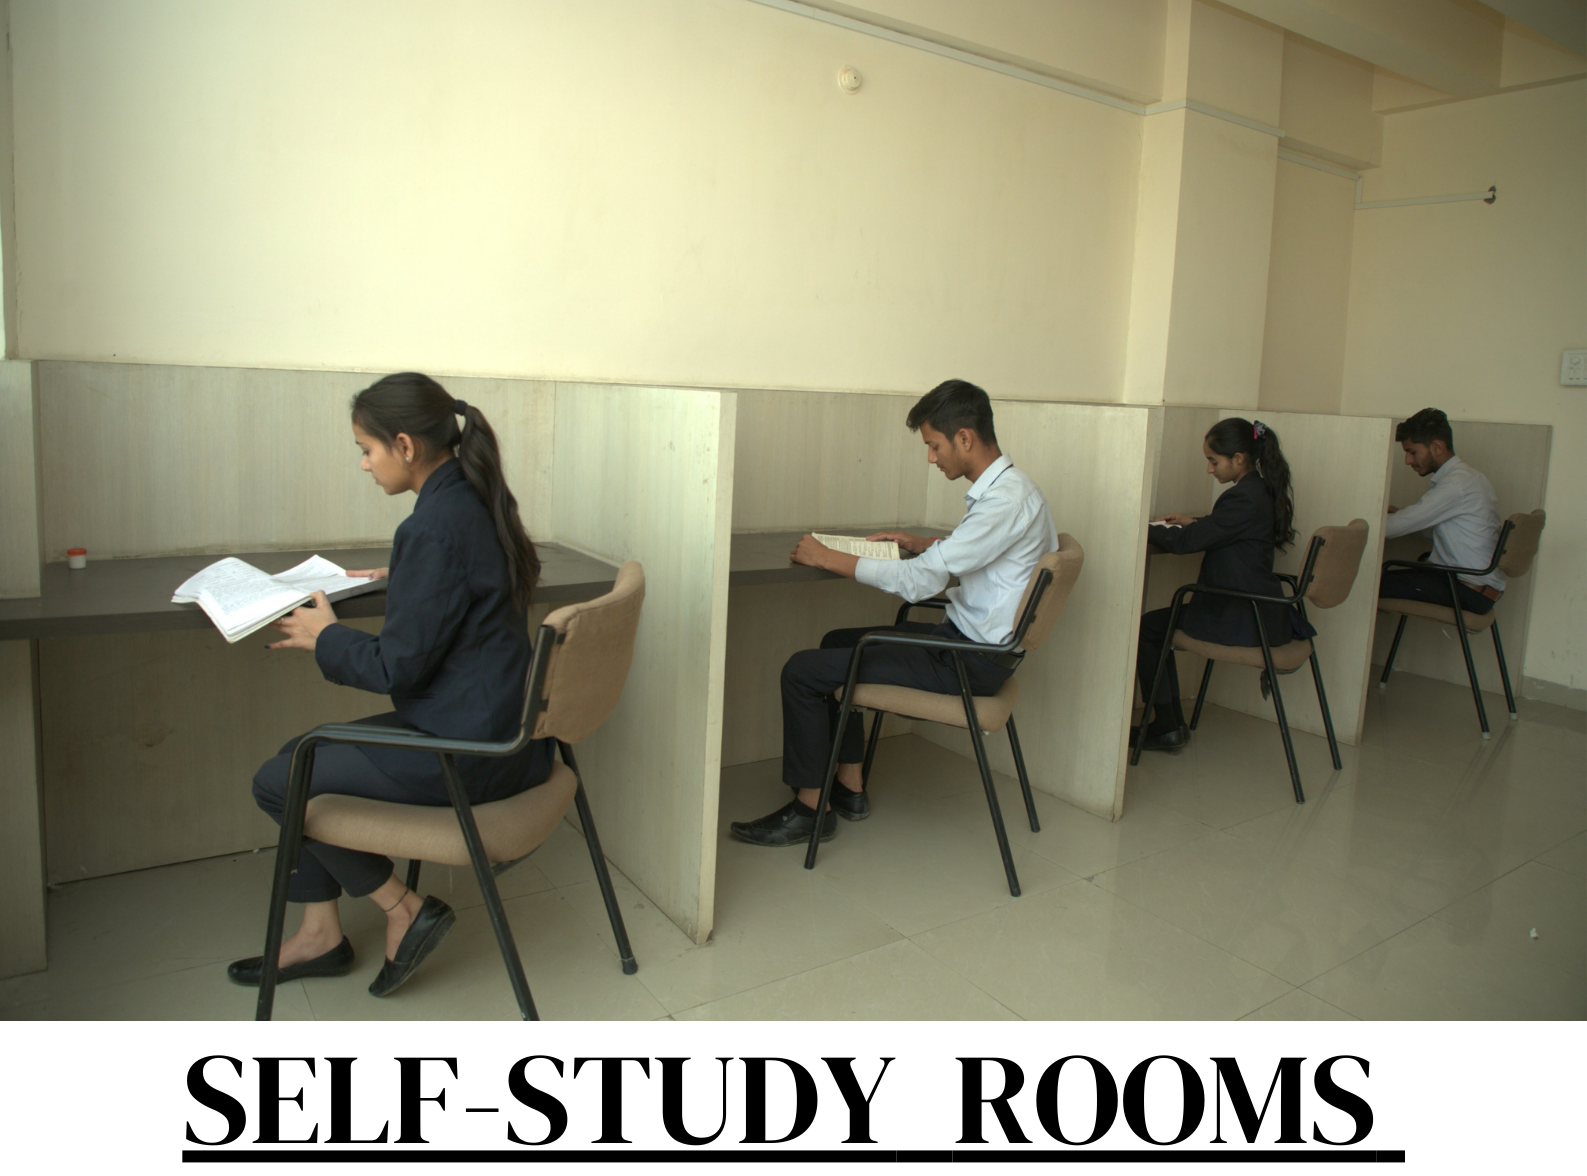 SELF-STUDY ROOMS